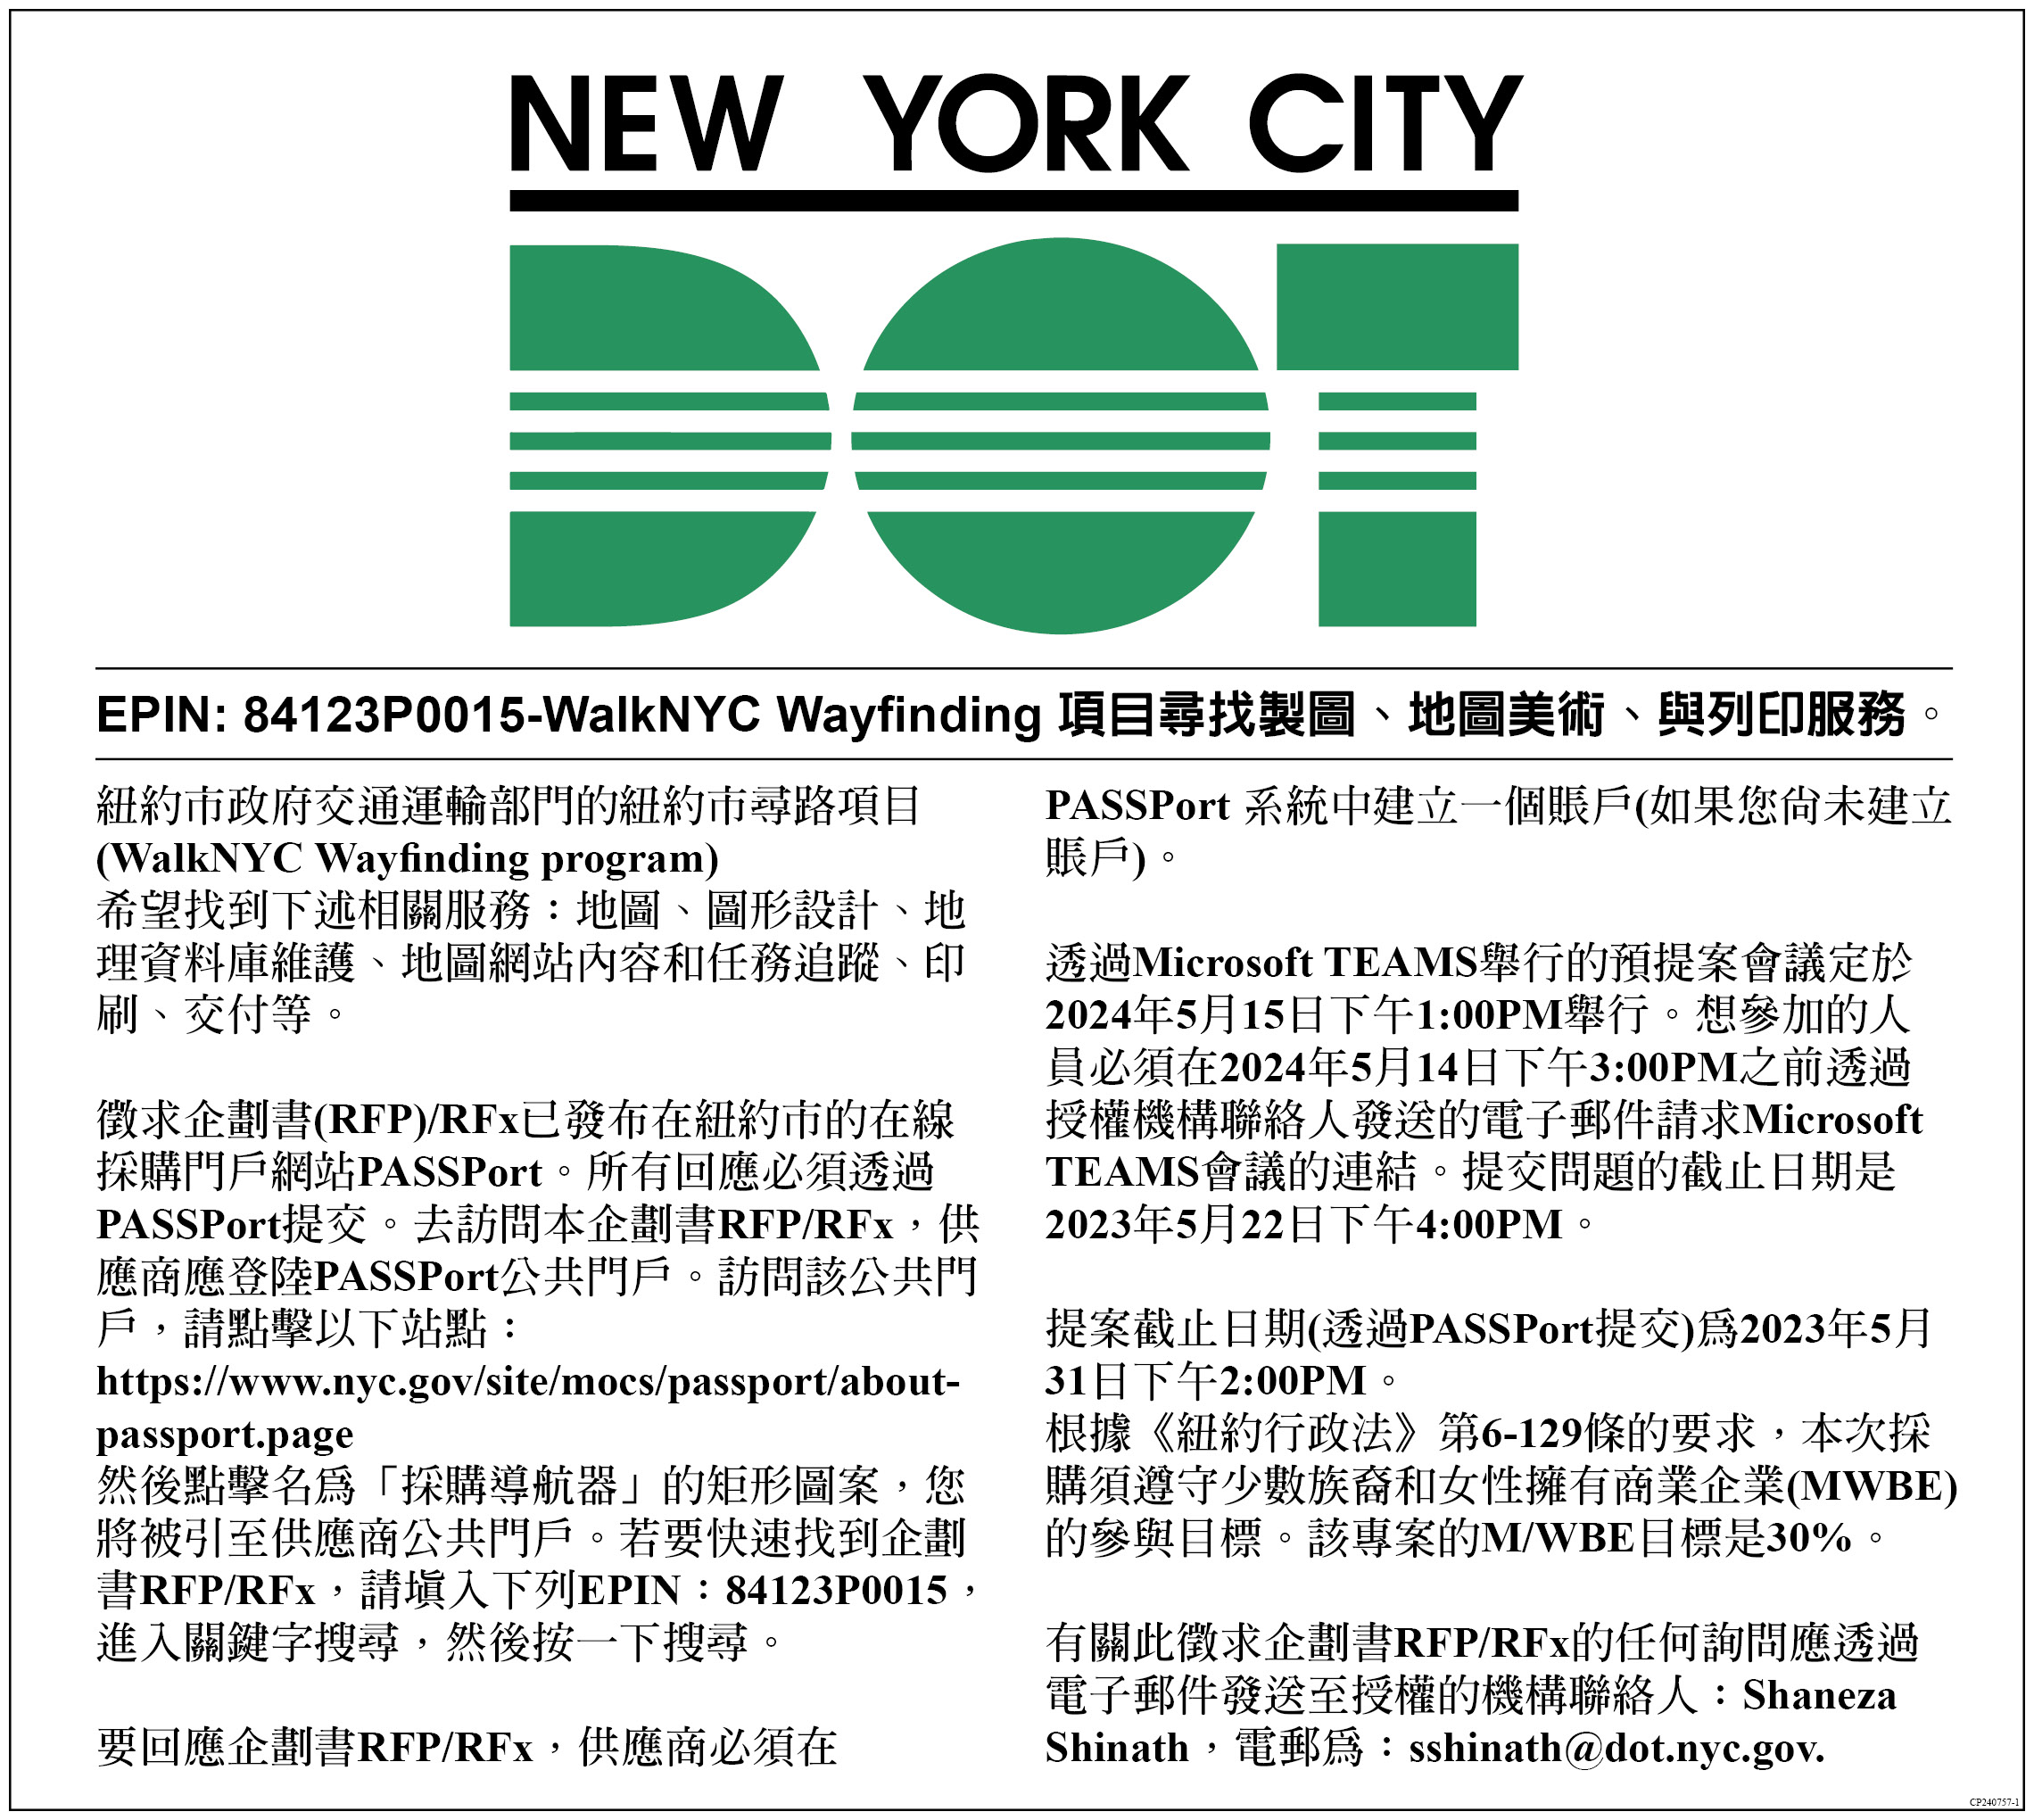 THE NEW YORK CITY DEPARTMENT OF TRANPORTATION